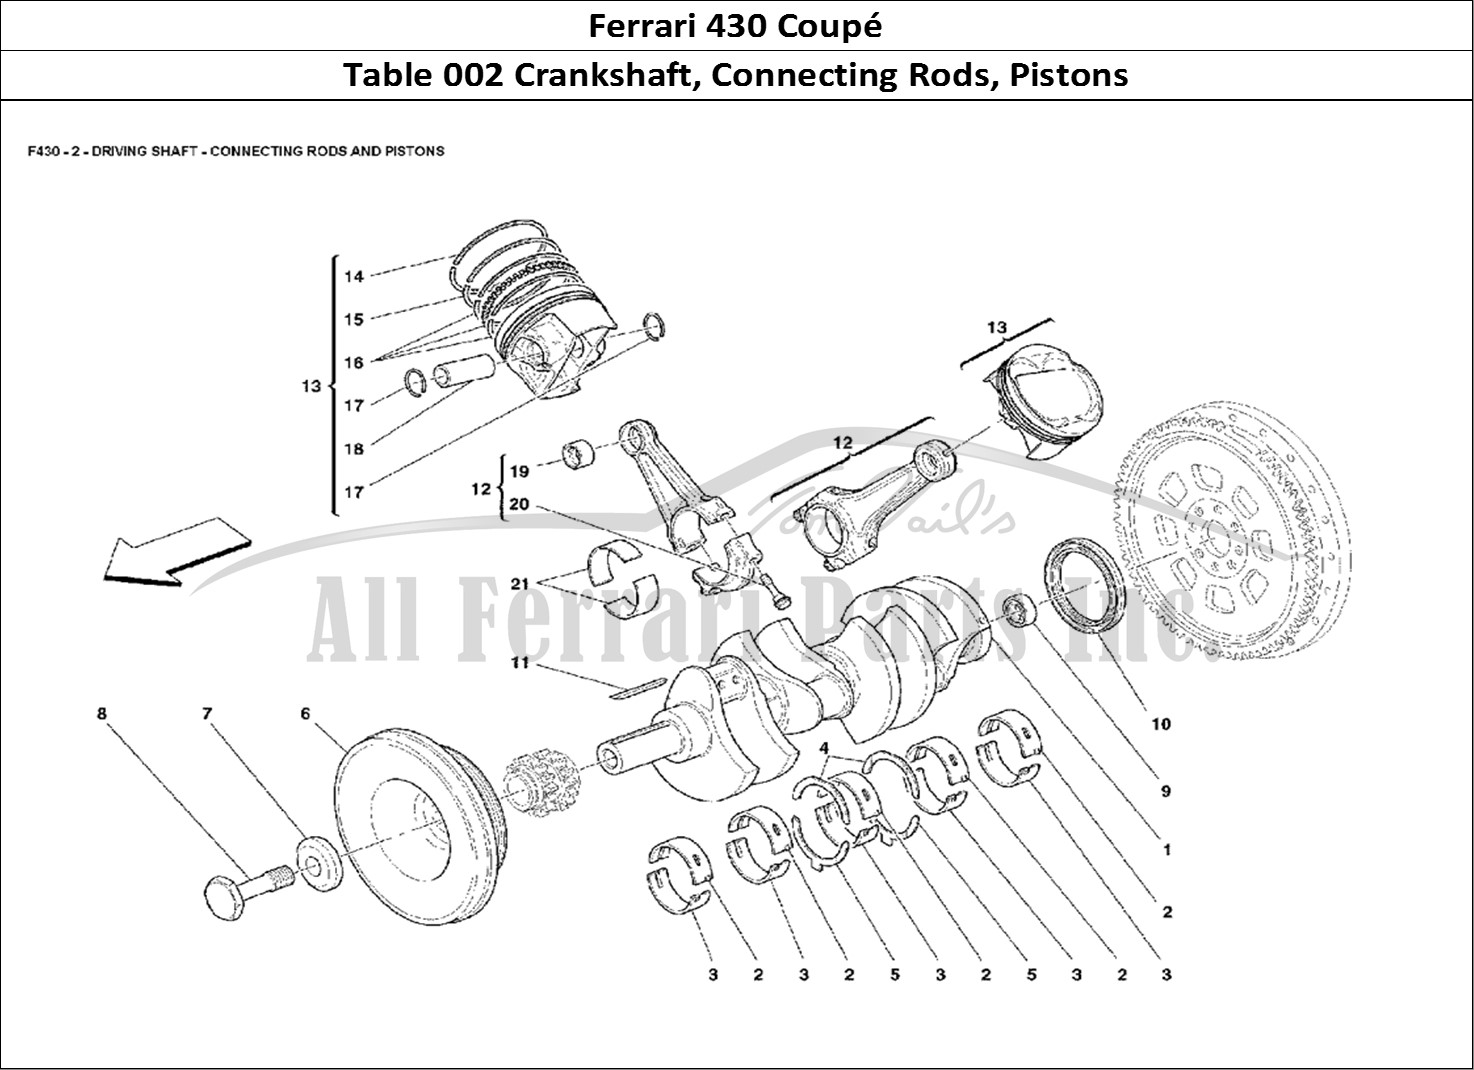 Ferrari Parts Ferrari 430 Coup Page 002 Crankshaft, Conrods And P